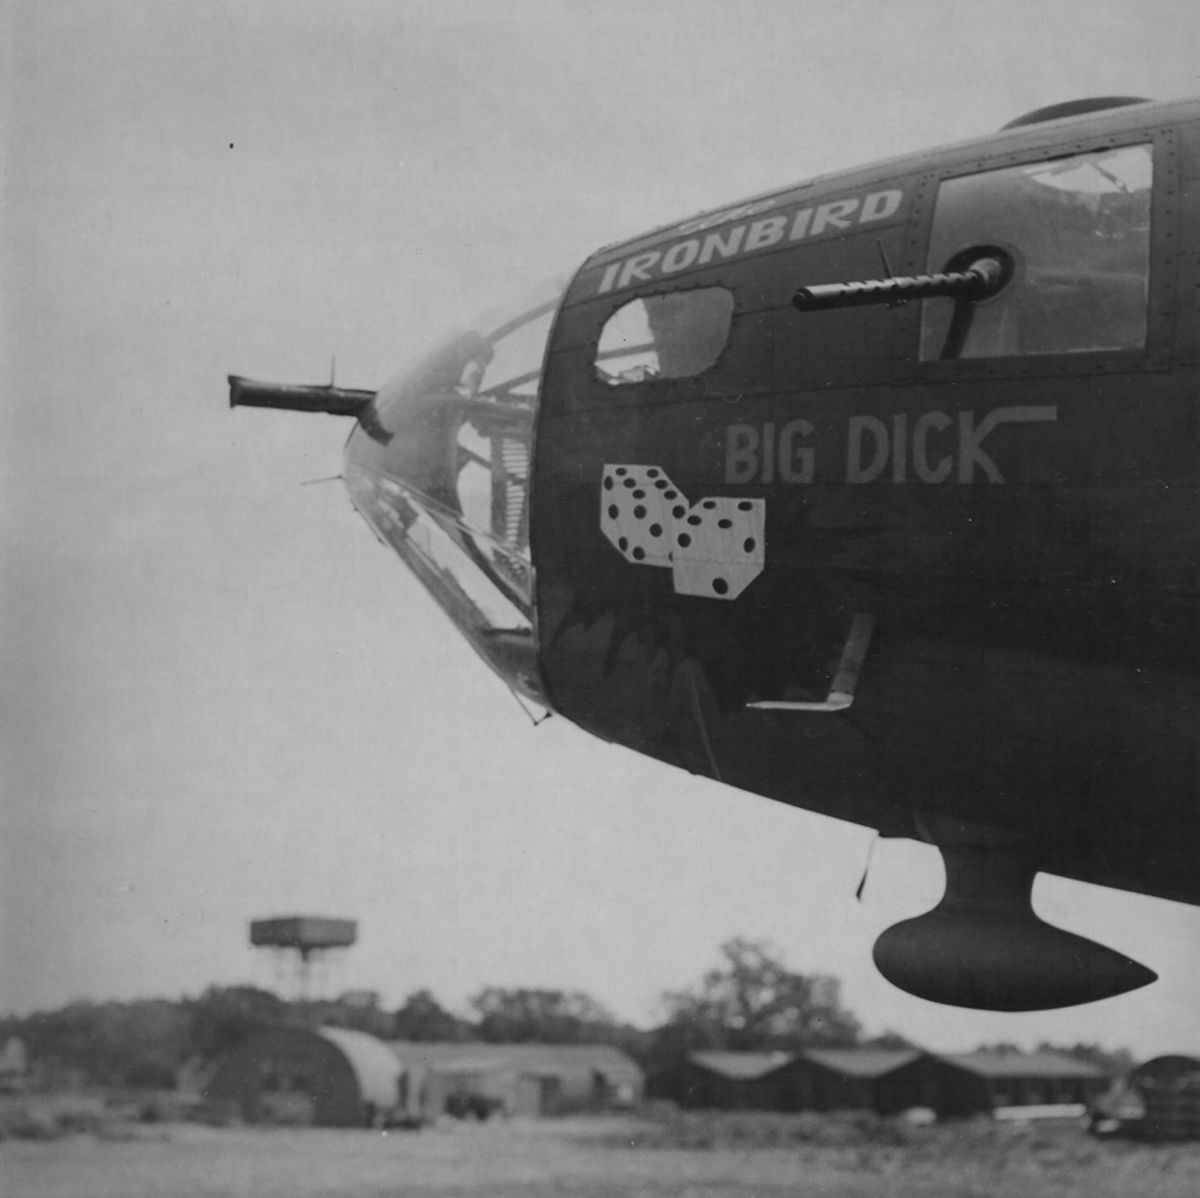 B-17 #42-30123 / Big Dick aka The Ironbird